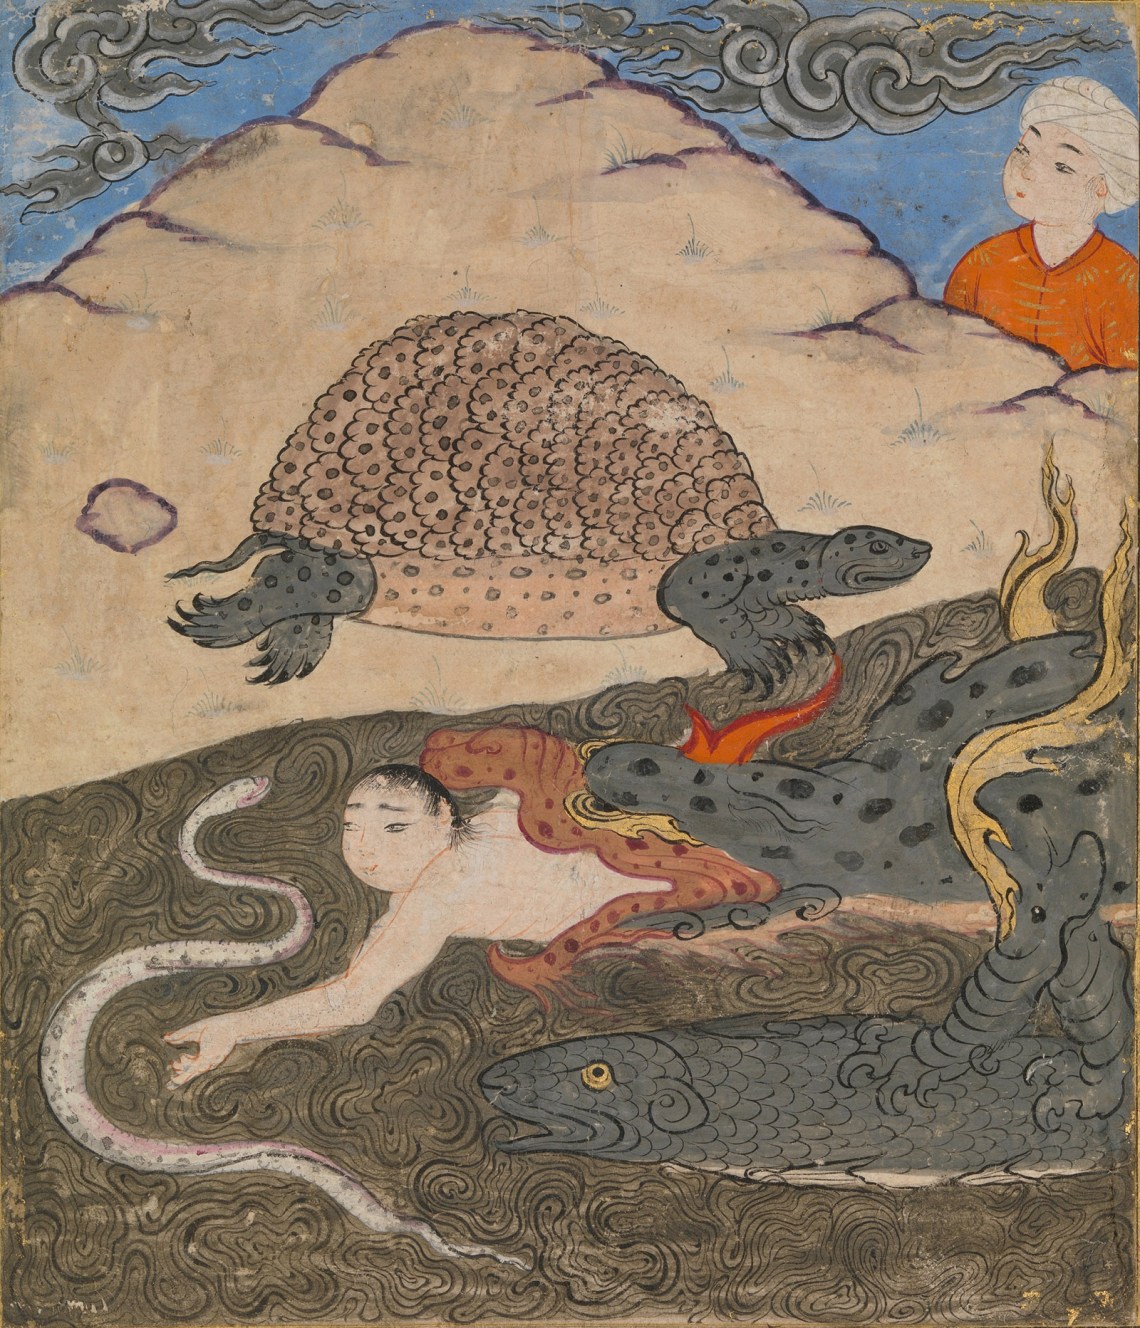 ‘The Tortoise’; illustration from a manuscript of al-Qazwini’s The Wonders of Creation